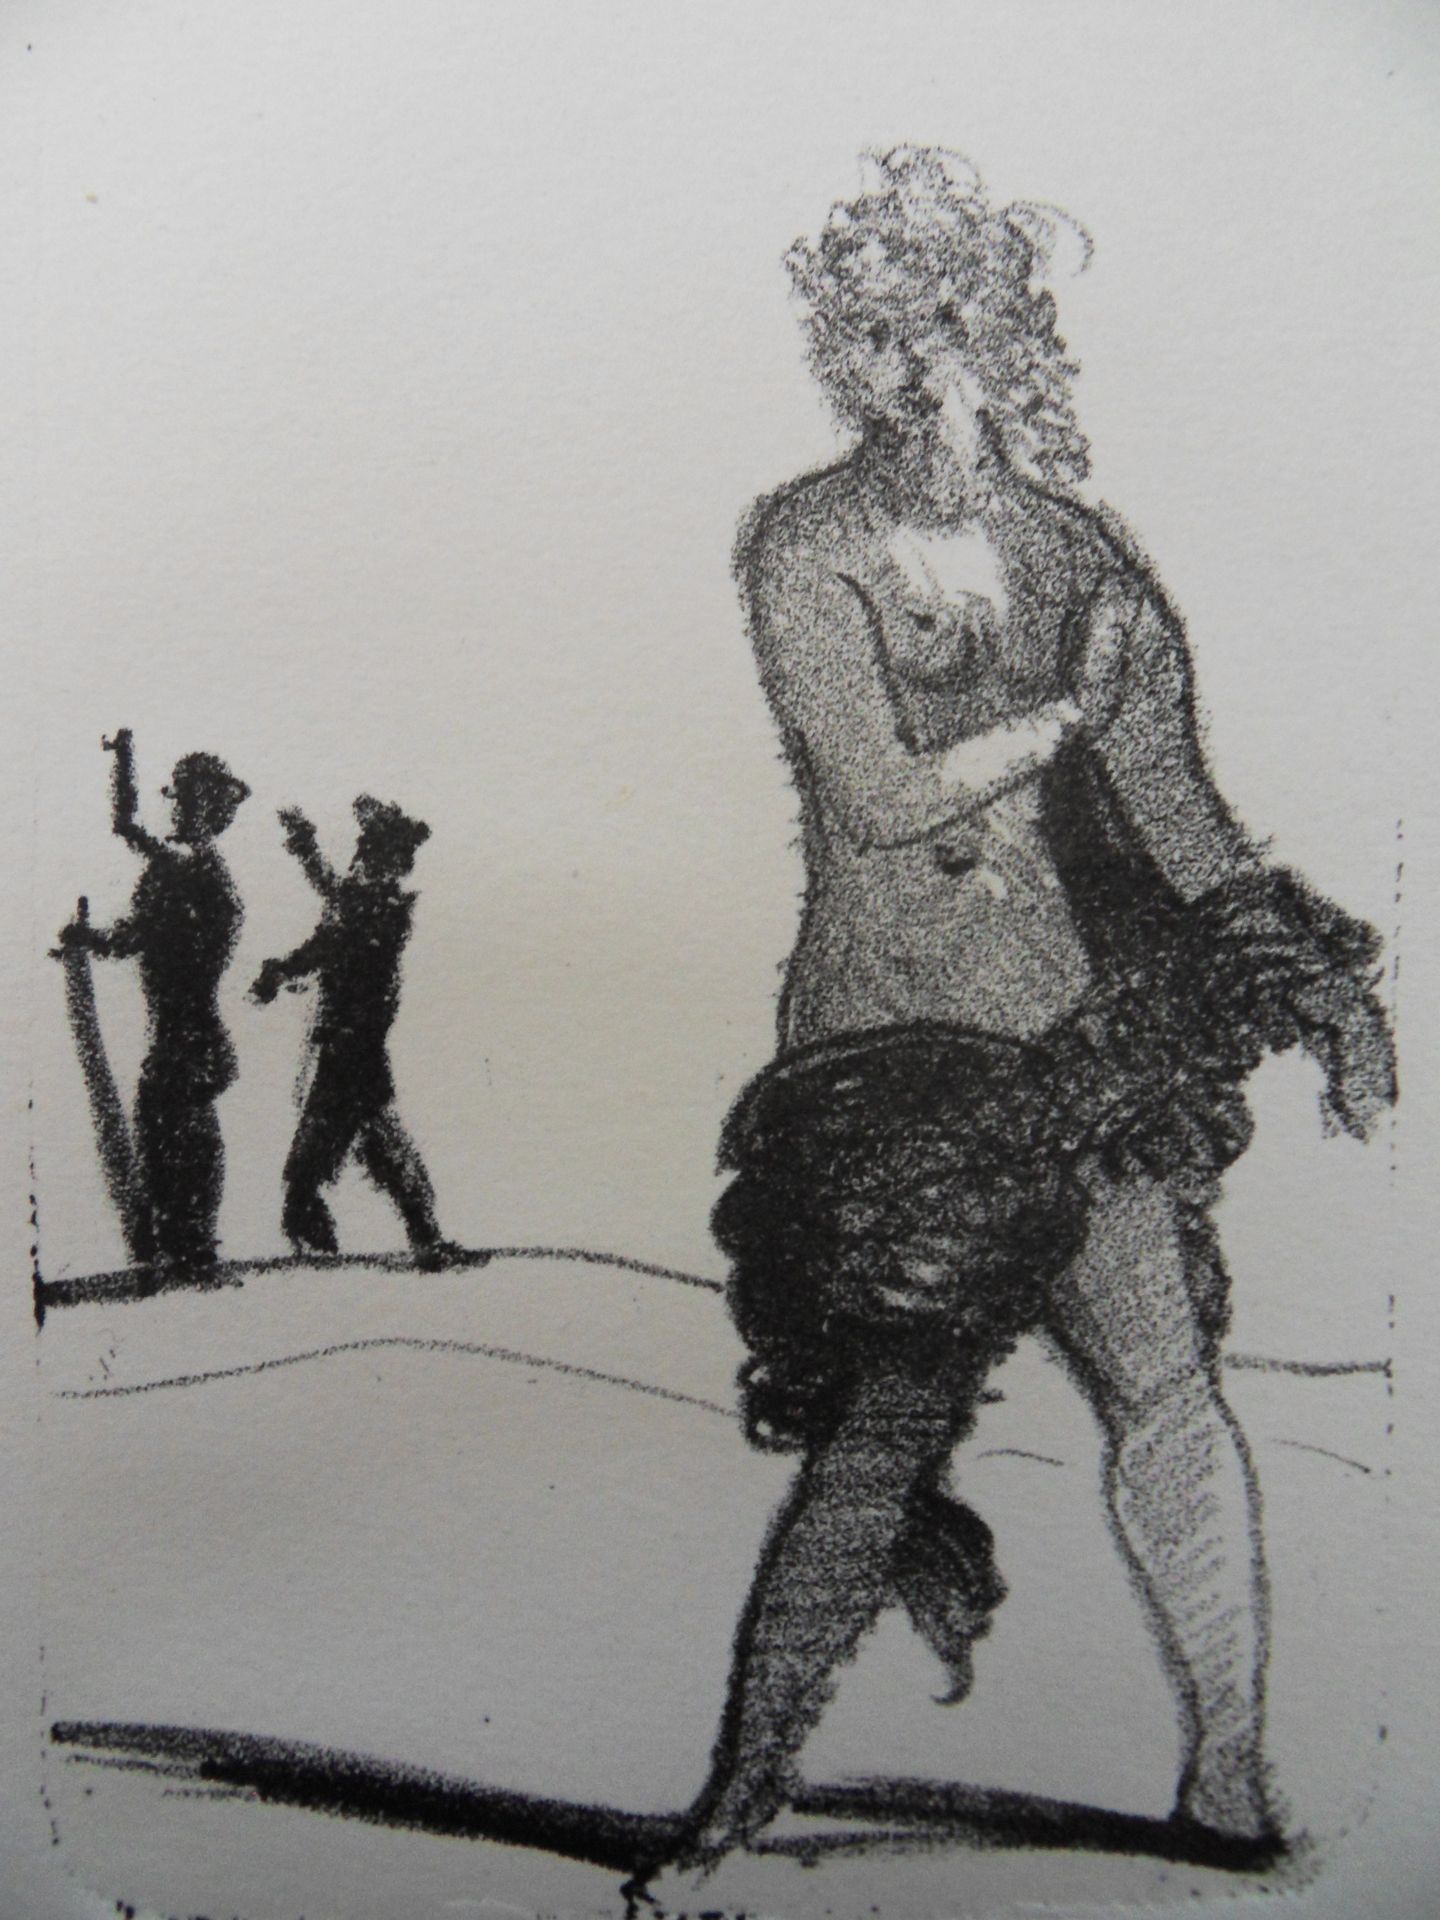 ANDRÉ DERAIN 安德烈-德兰(André DERAIN) (1880-1954)

被来访者惊讶的裸体，1950年

原版石版画（MOURLOT工作室&hellip;